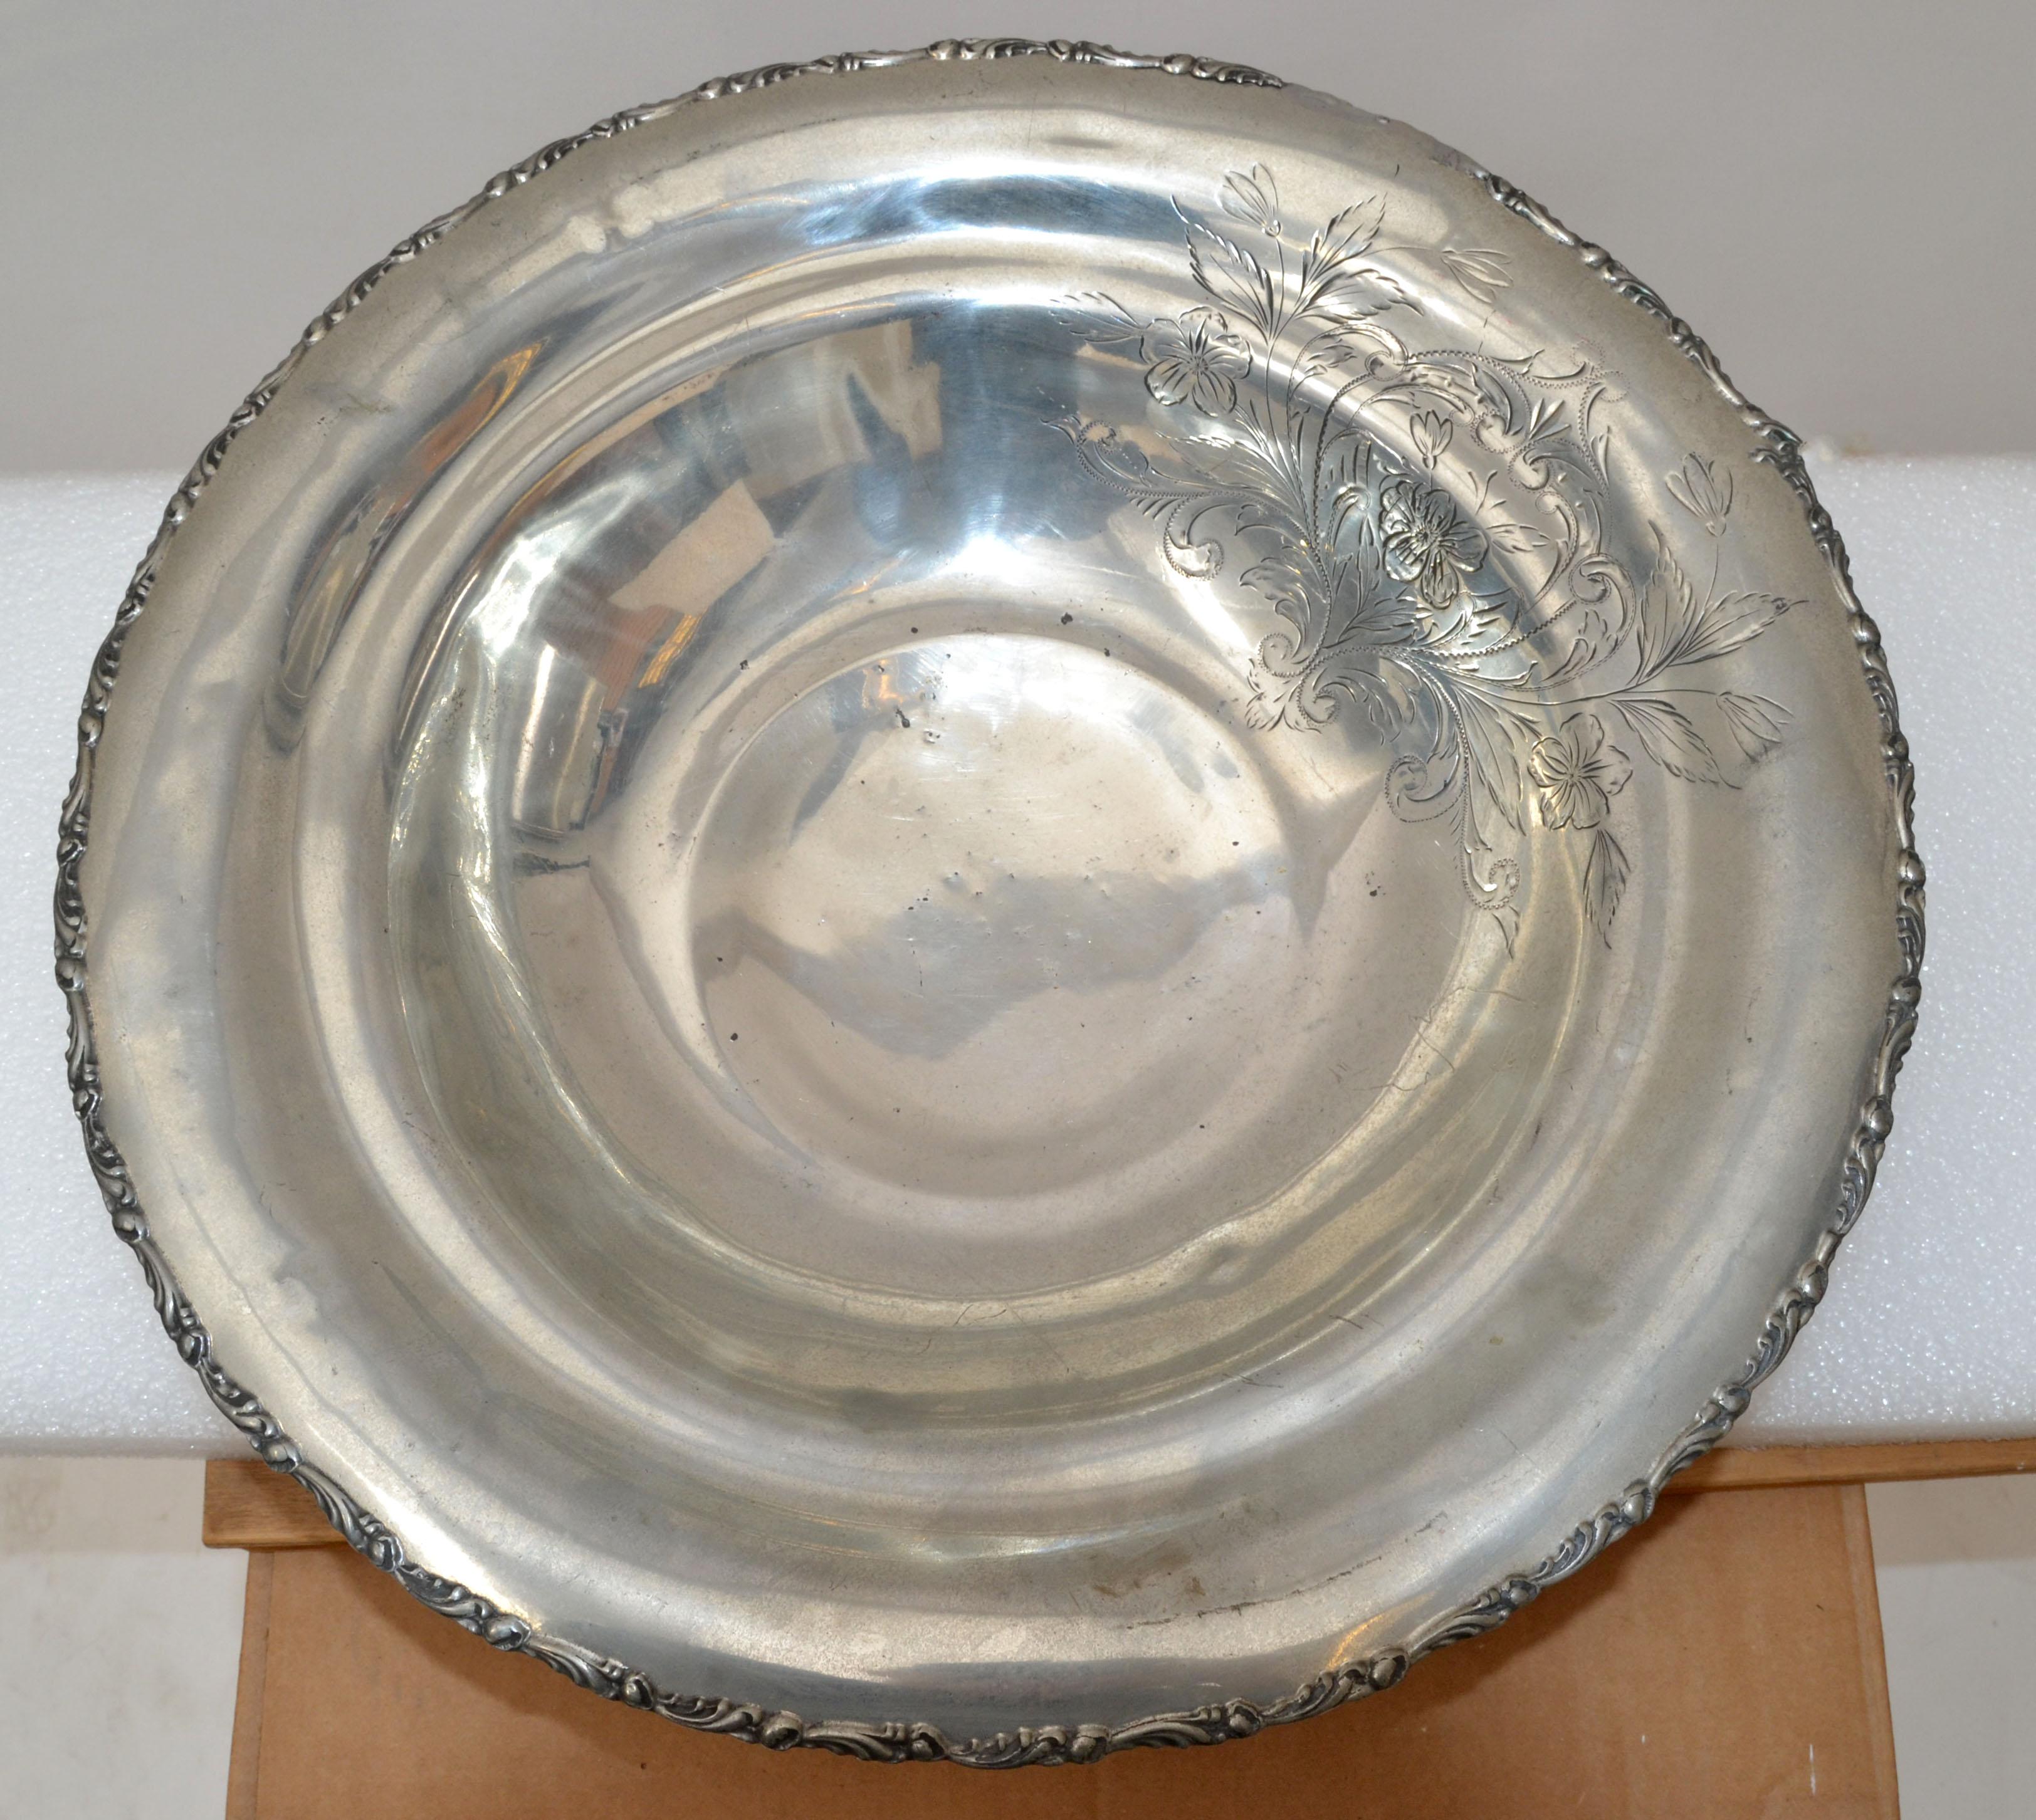 English Silver Plate Trademark Ornate Large Bowl Footed Serving Dish Punch Bowl (Handgefertigt) im Angebot